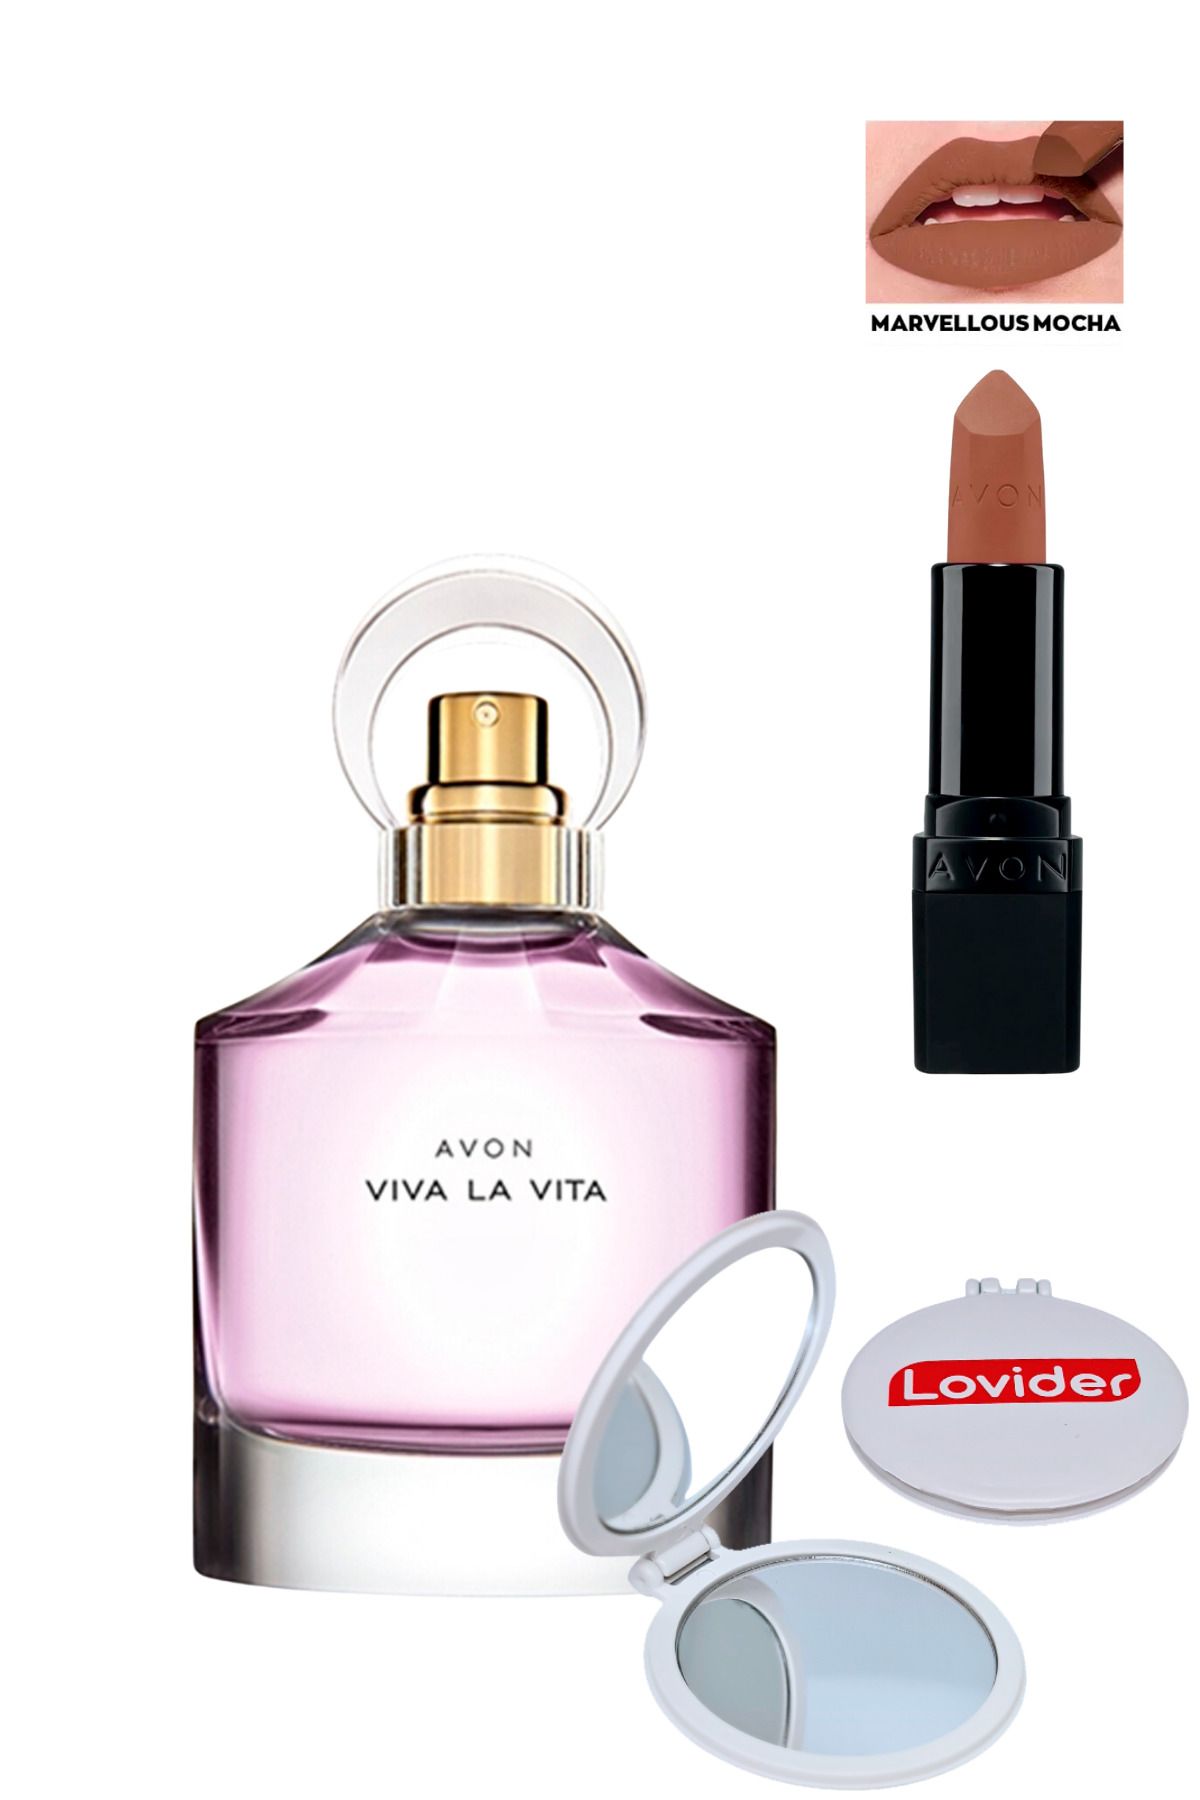 Avon Viva La Vita Kadın Parfüm EDP 50ml + Marvellous Mocha Mat Ruj + Lovider Cep Aynası